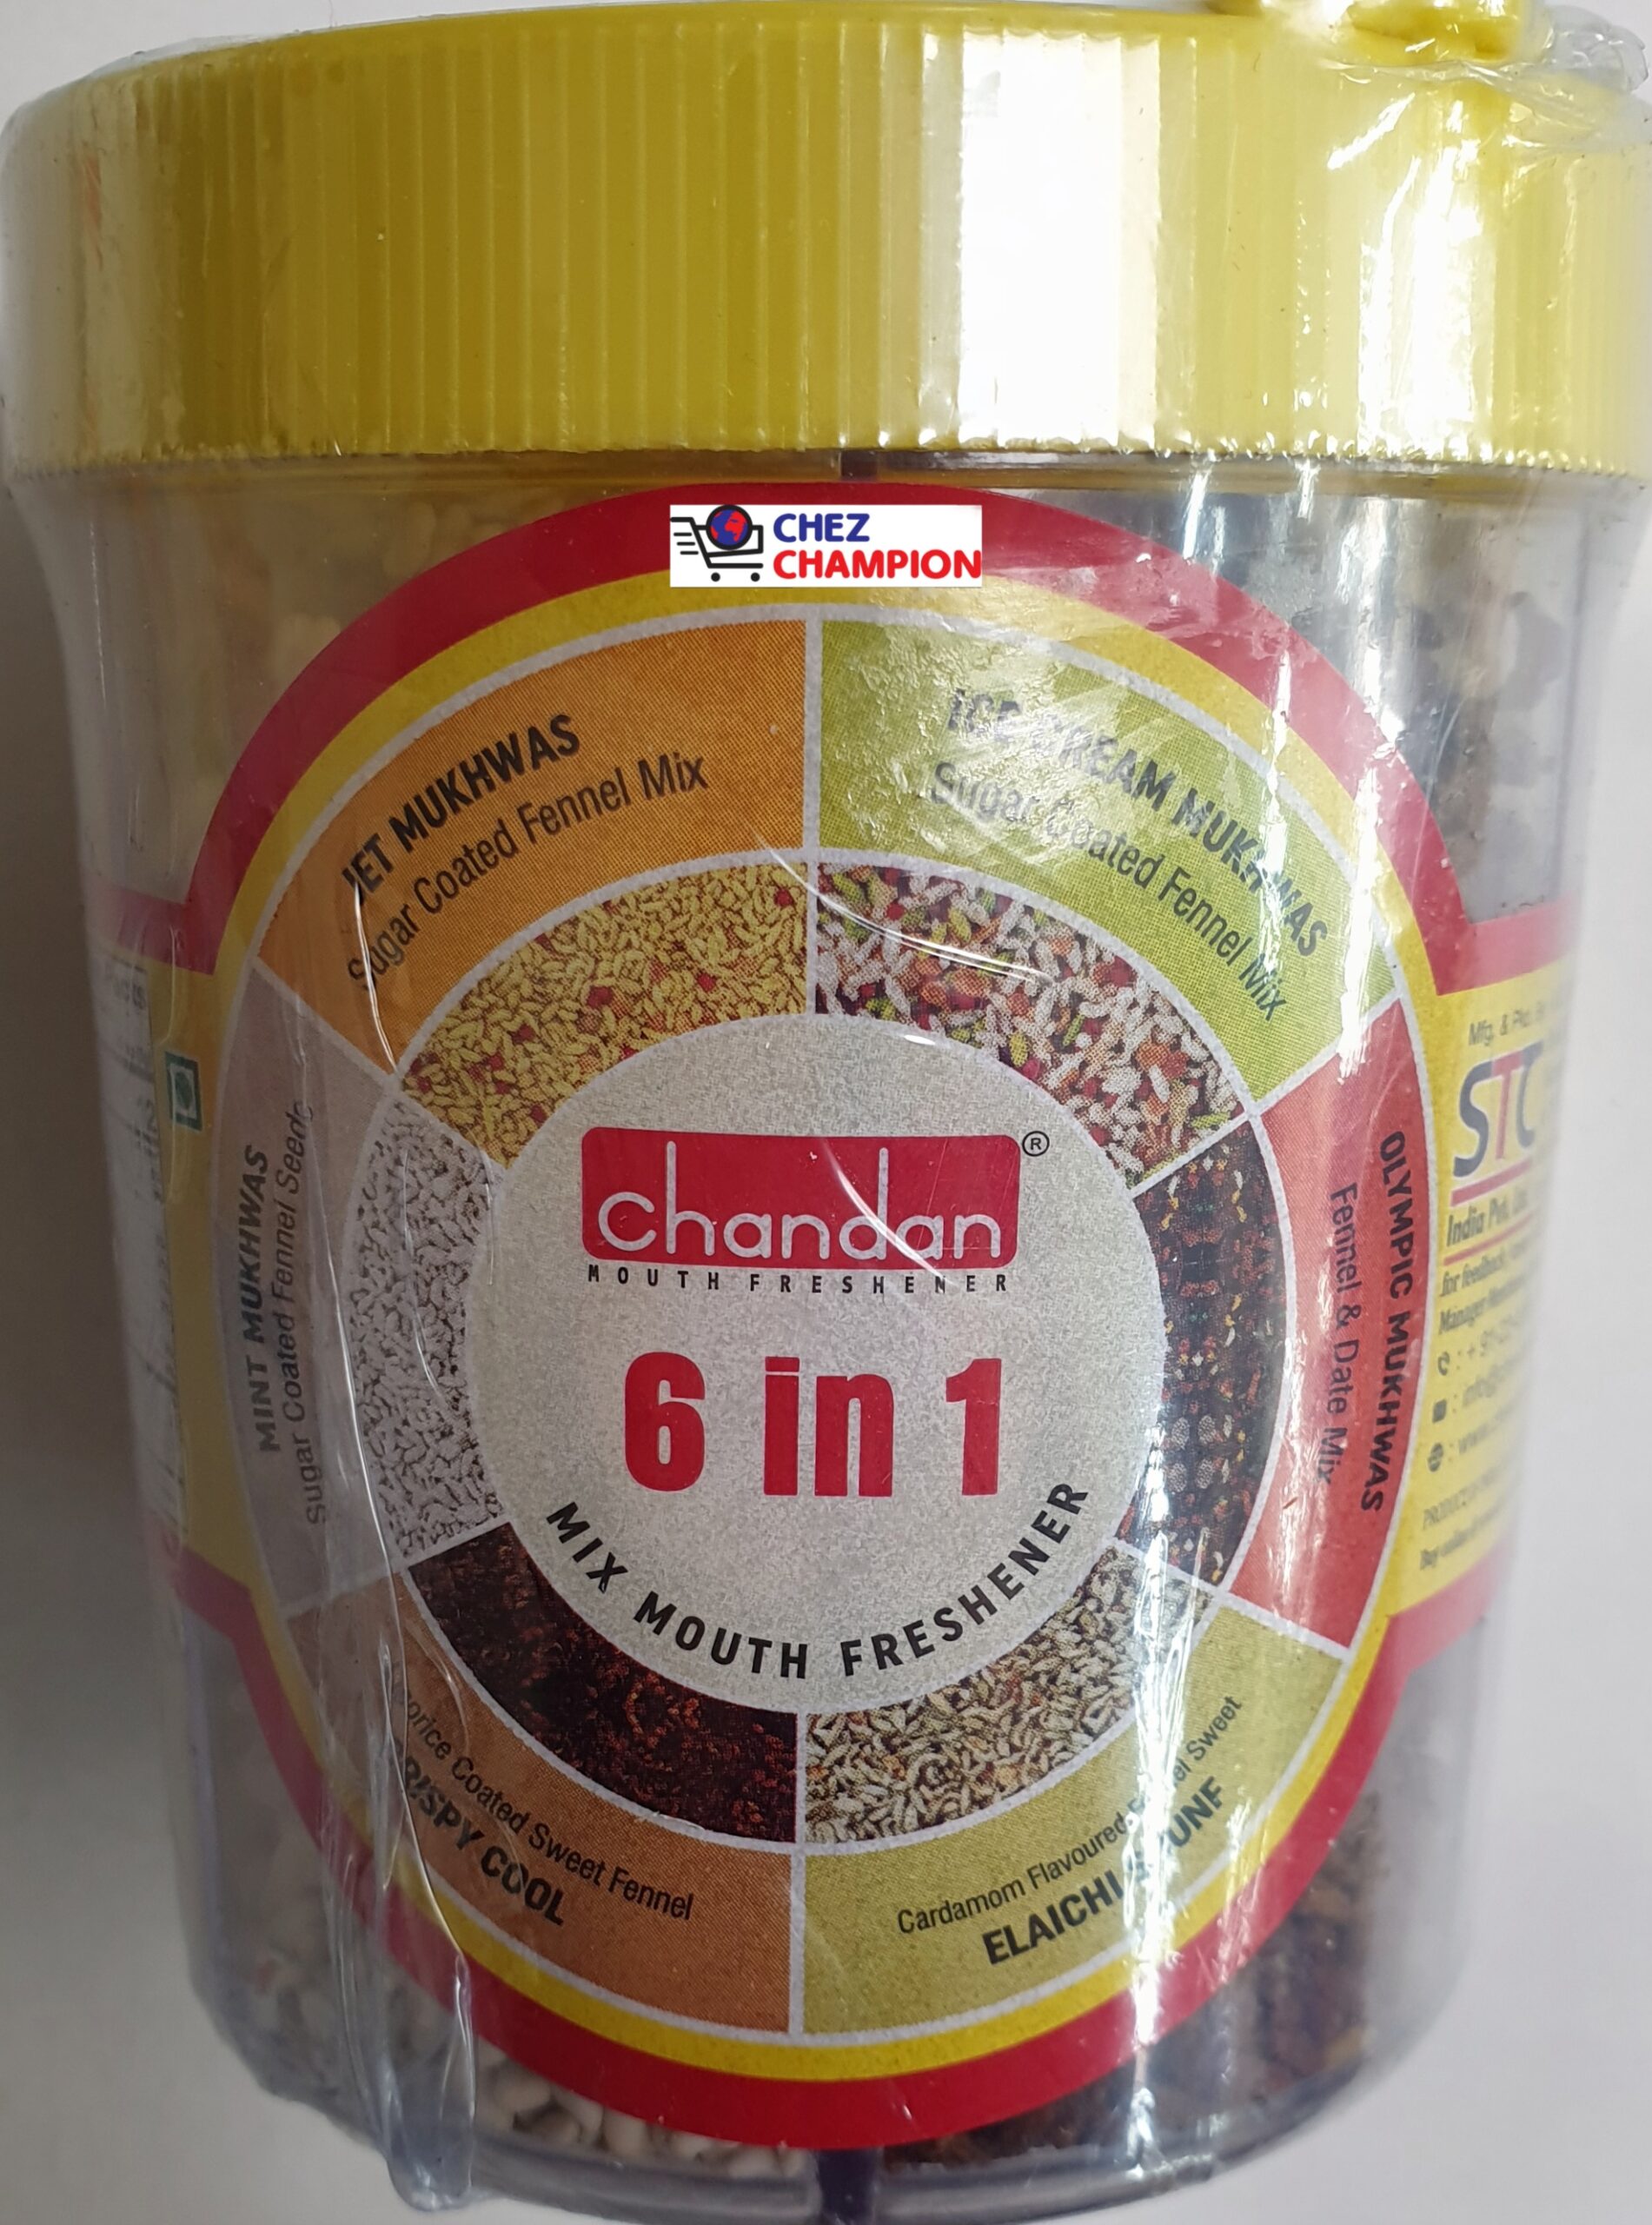 Chandan 6 in 1 mix mouth freshener – 230g